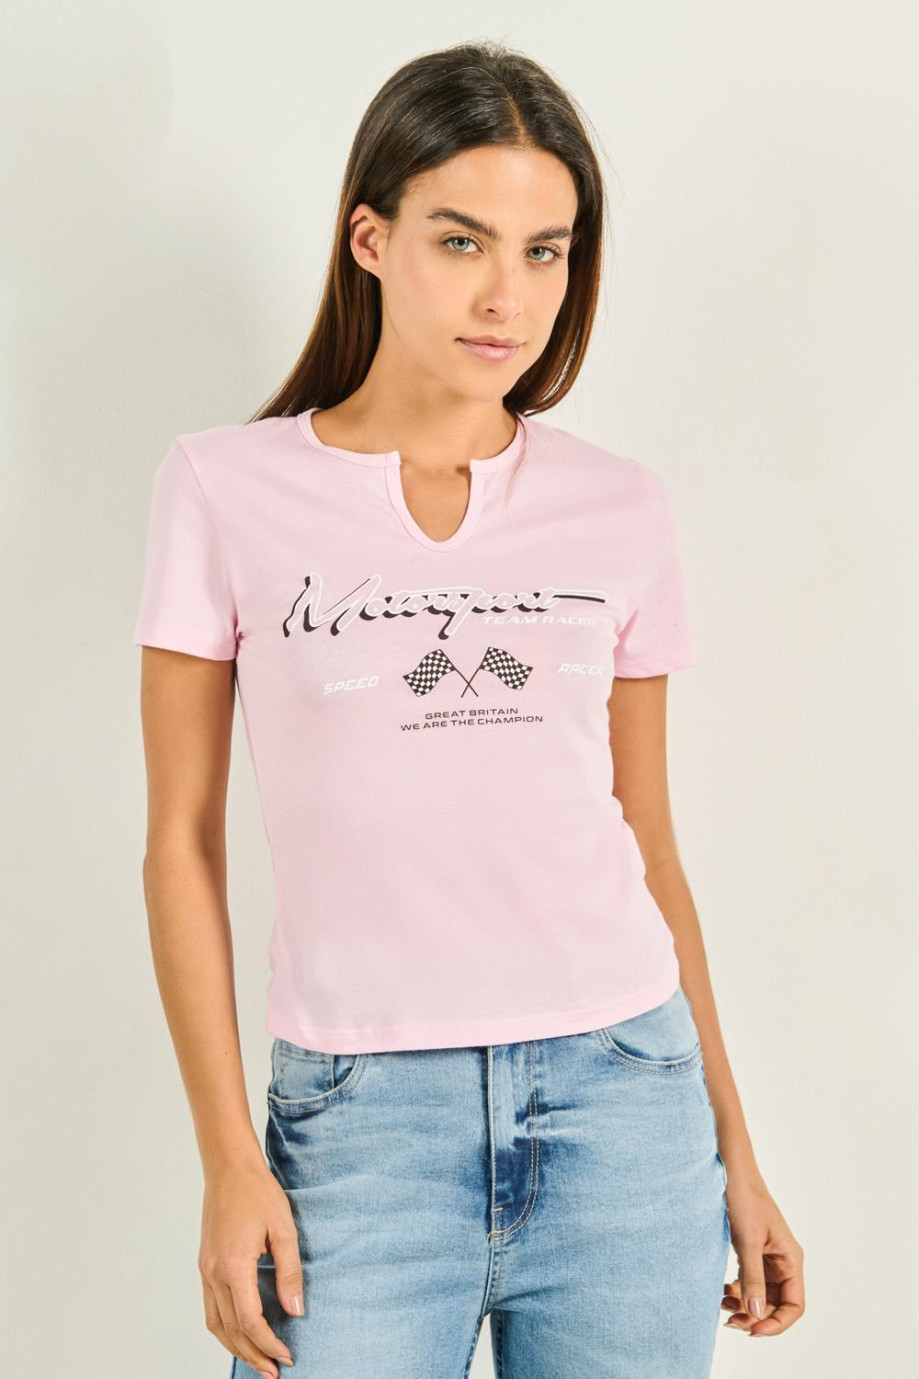 Camiseta unicolor manga corta con estampado racer en frente